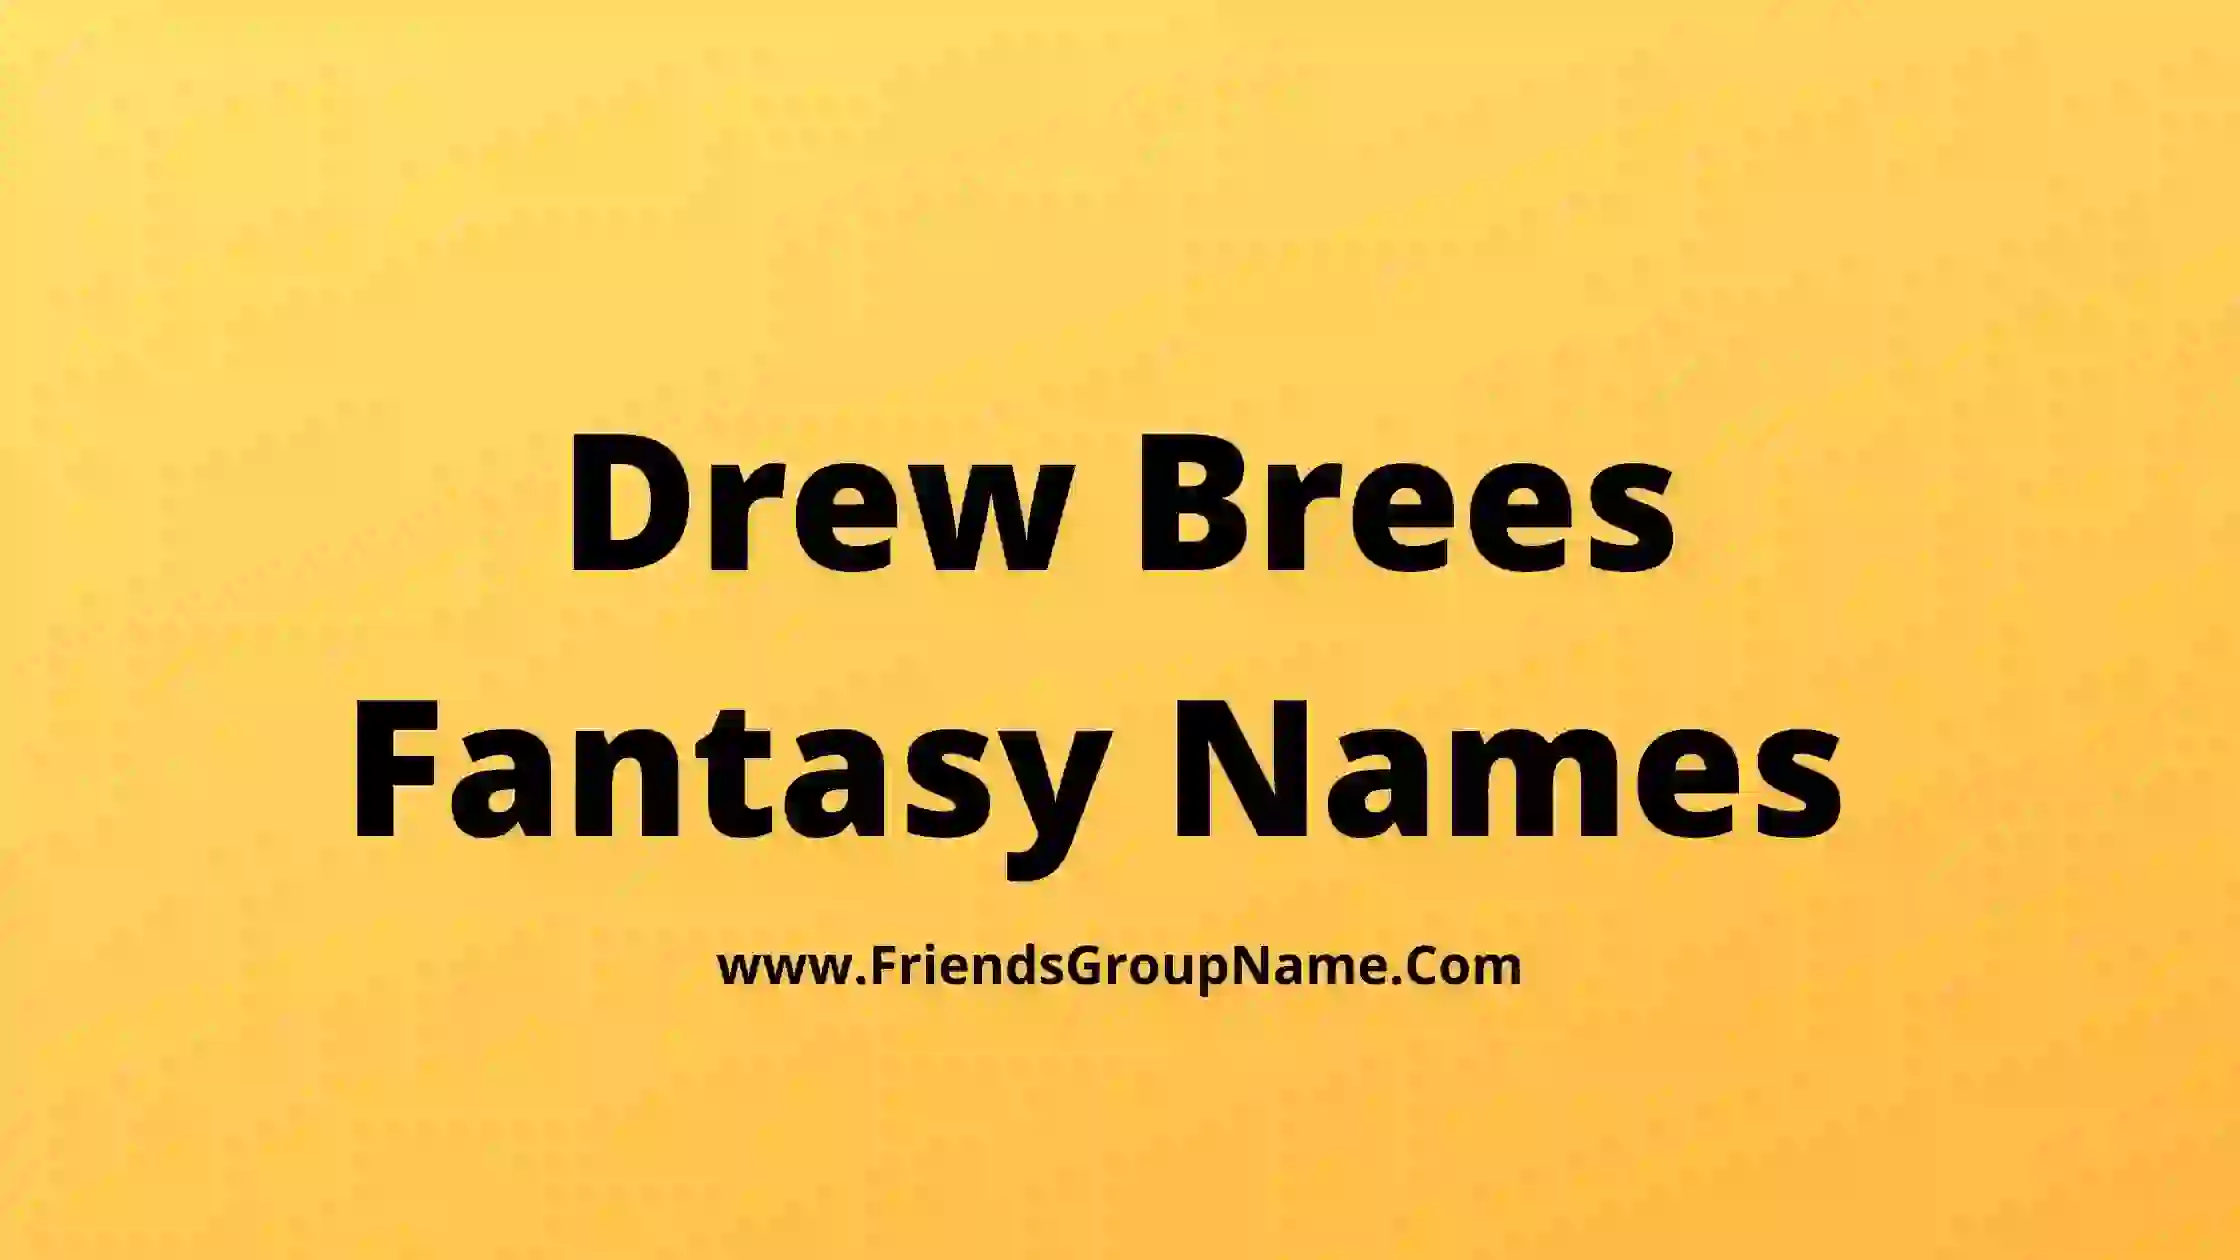 Drew Brees Fantasy Names